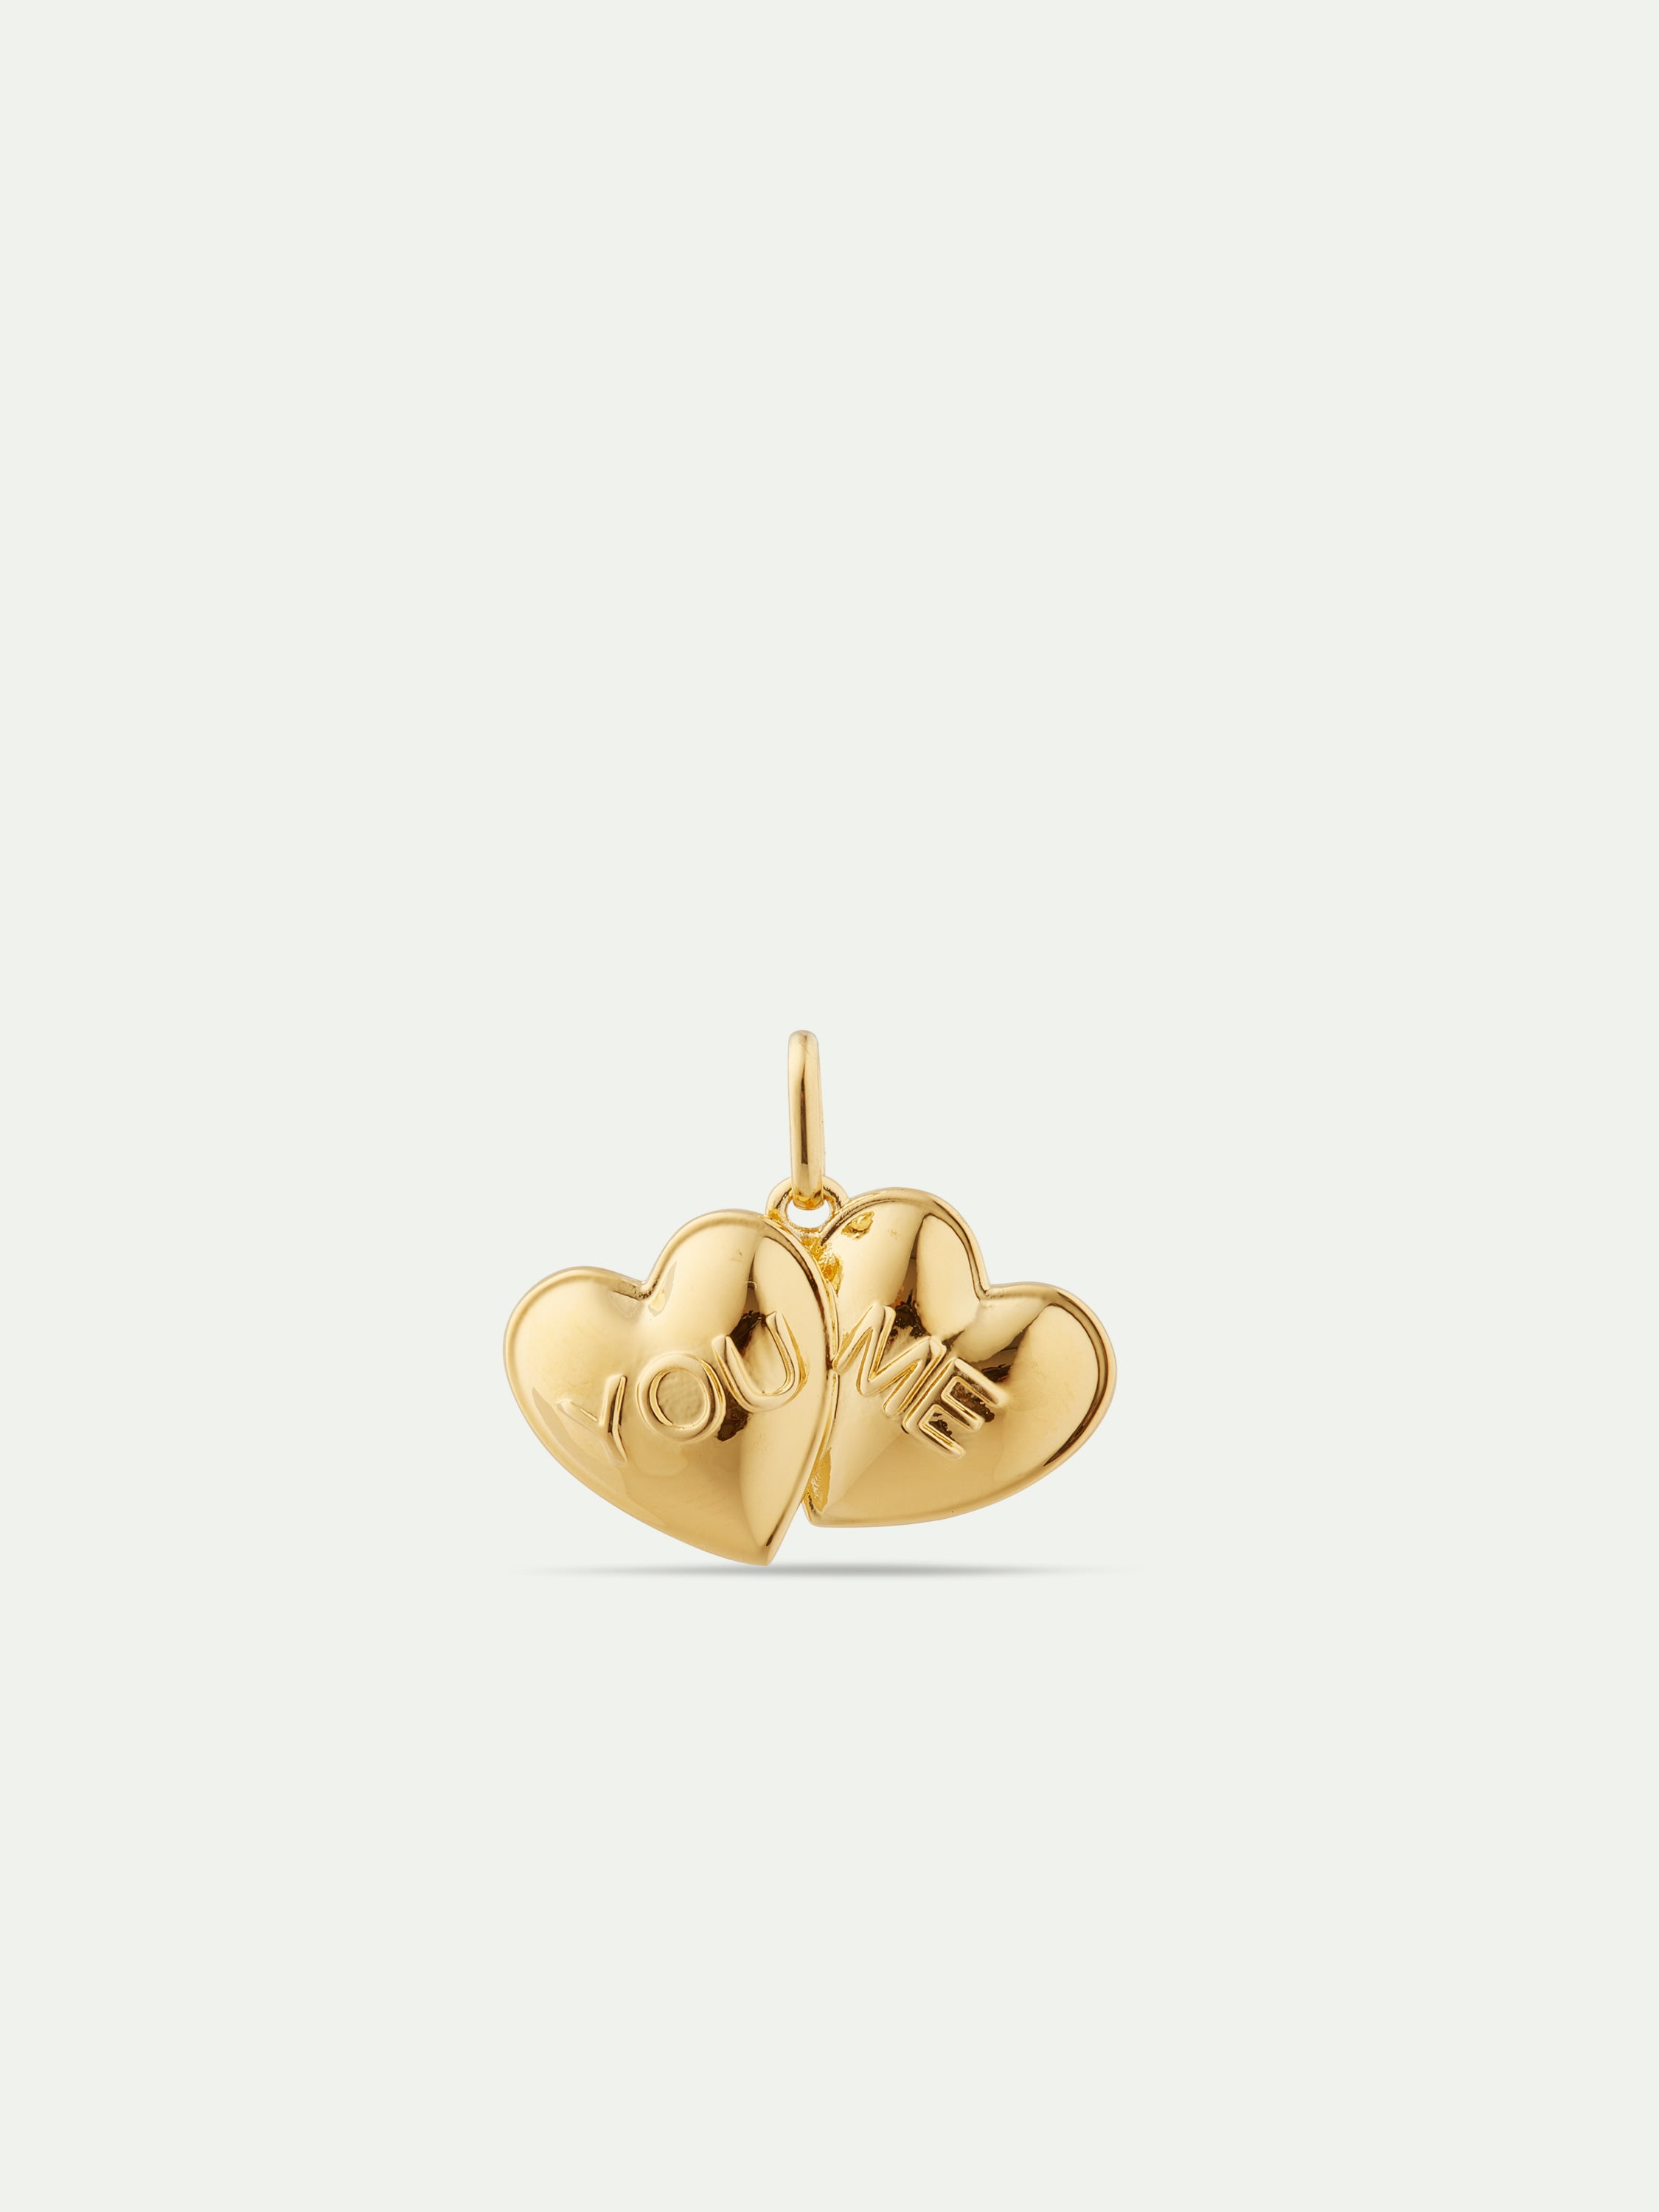 Pair of hearts pendant